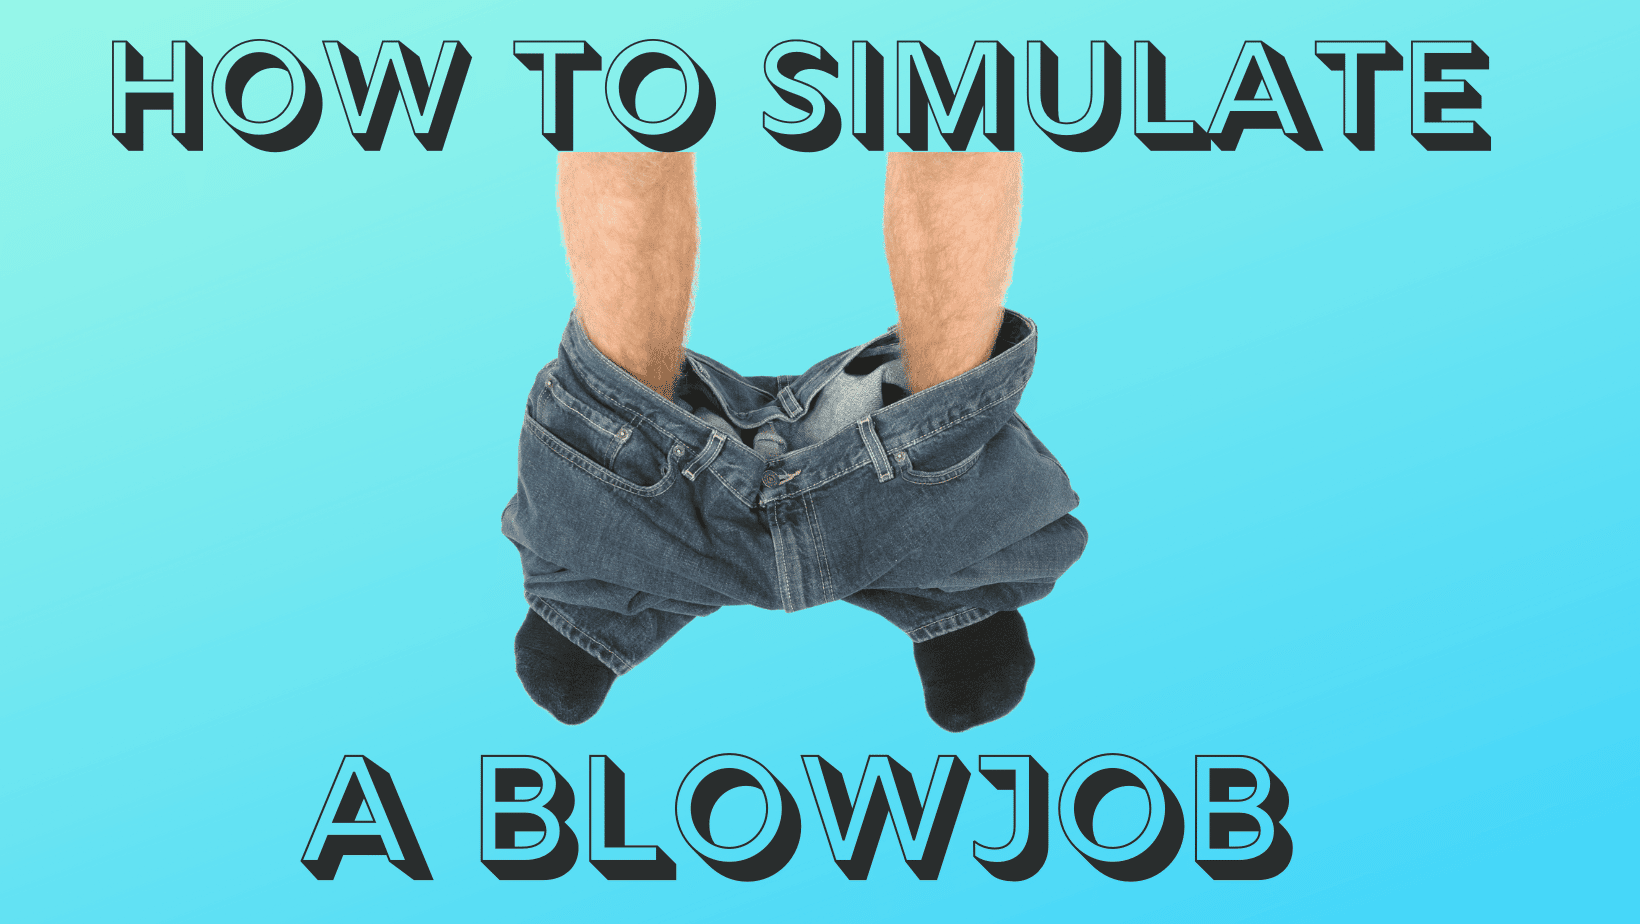 cristina santisteban recommends how to make a homemade blowjob pic